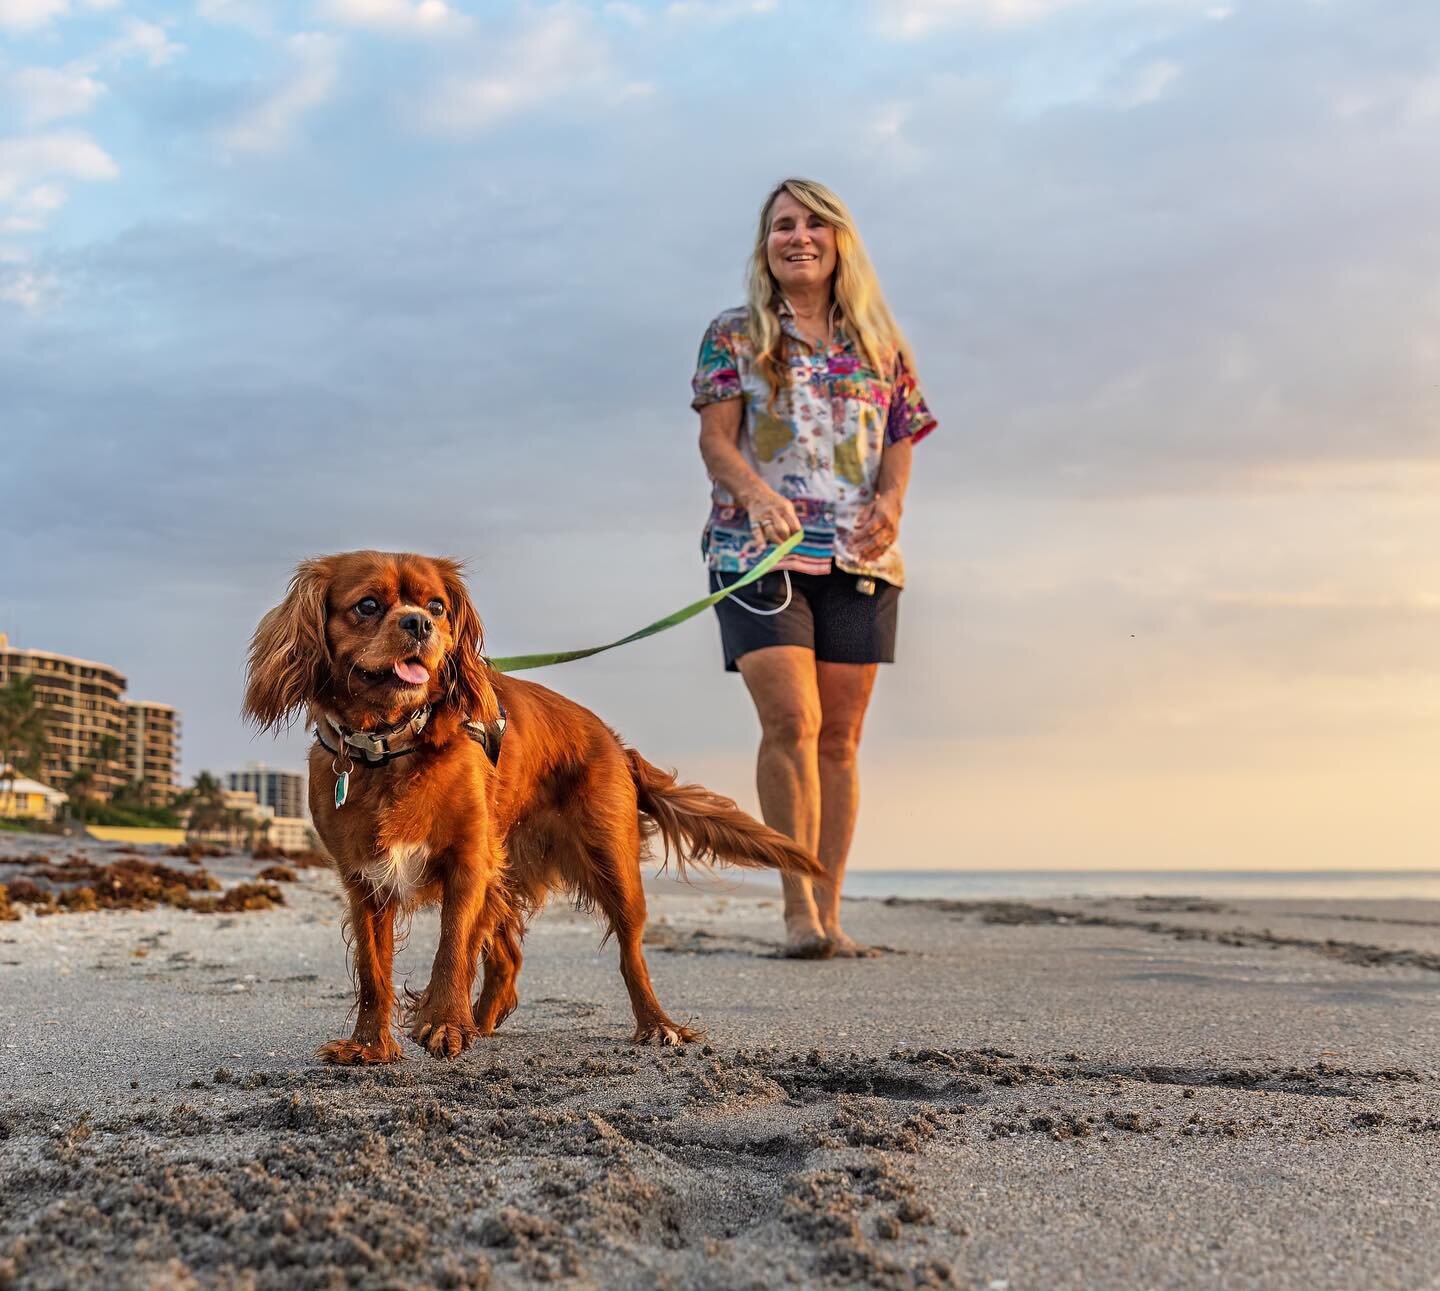 Florida beach vibes. #kingcharlescavalier #dogphotography